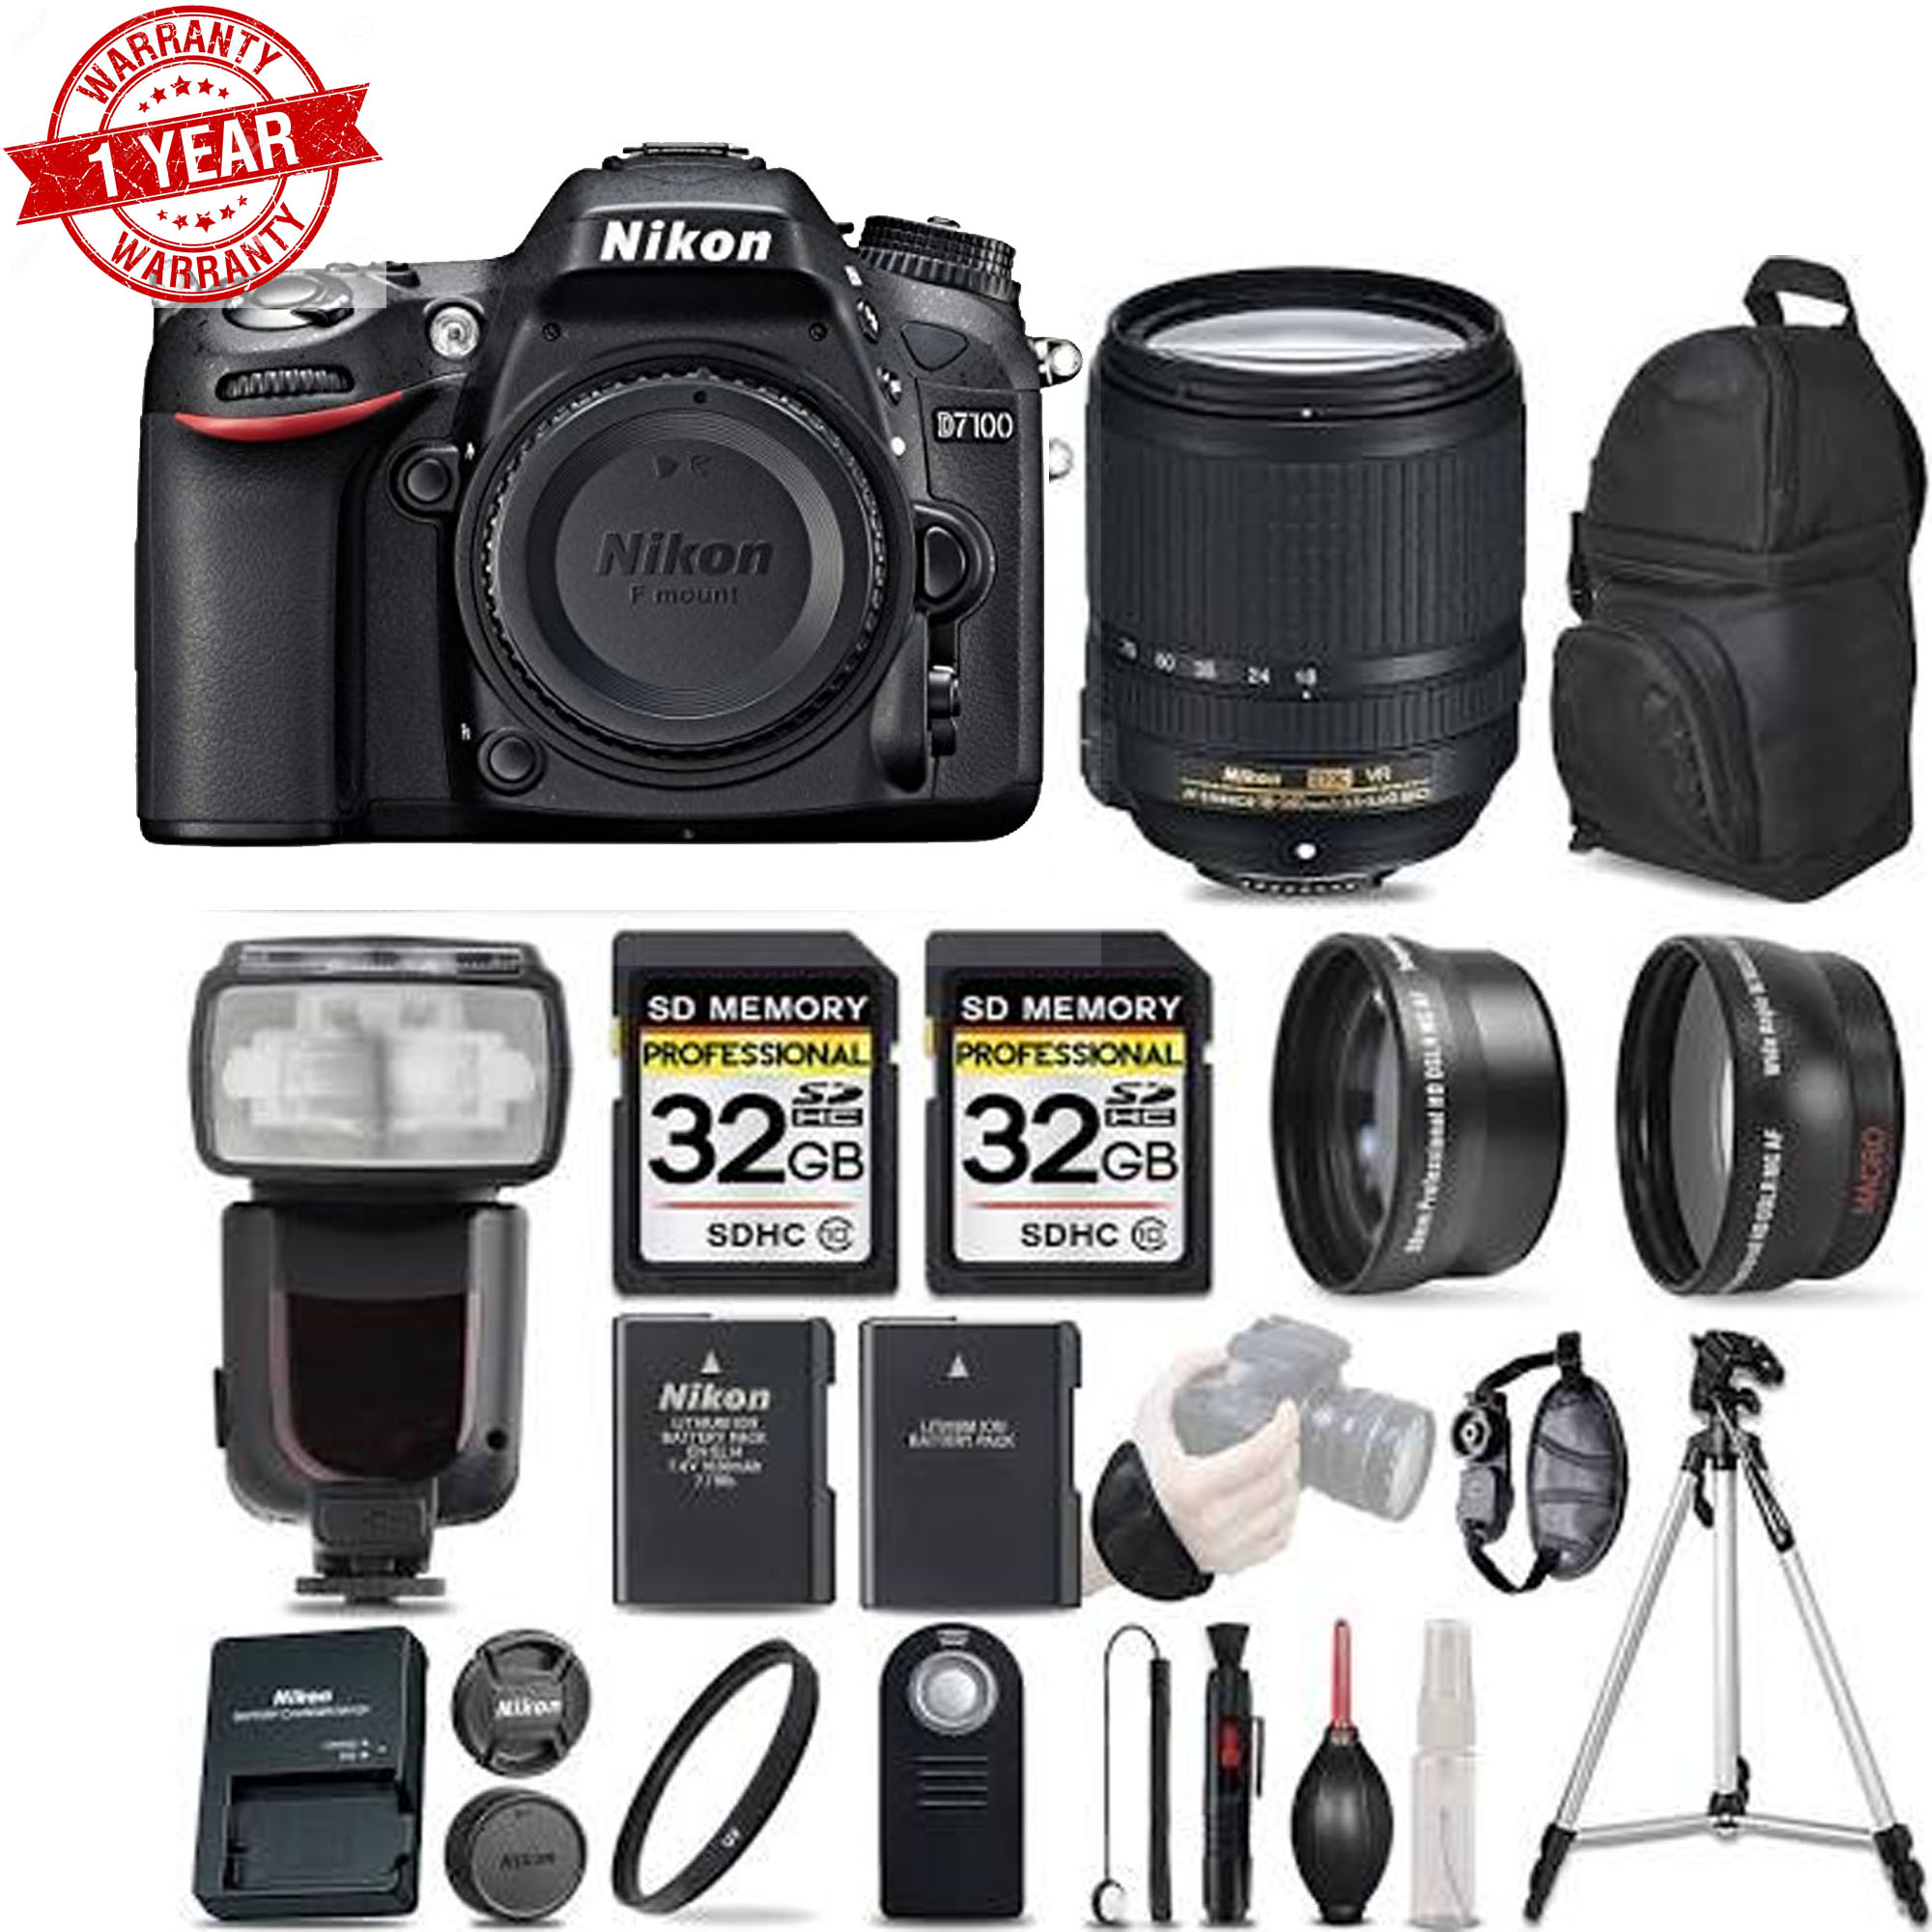 Nikon D7100 Digital SLR Camera 3 Lens: 18-140mm VR ||64GB ||Ultra Saving Kit, Black - image 1 of 10